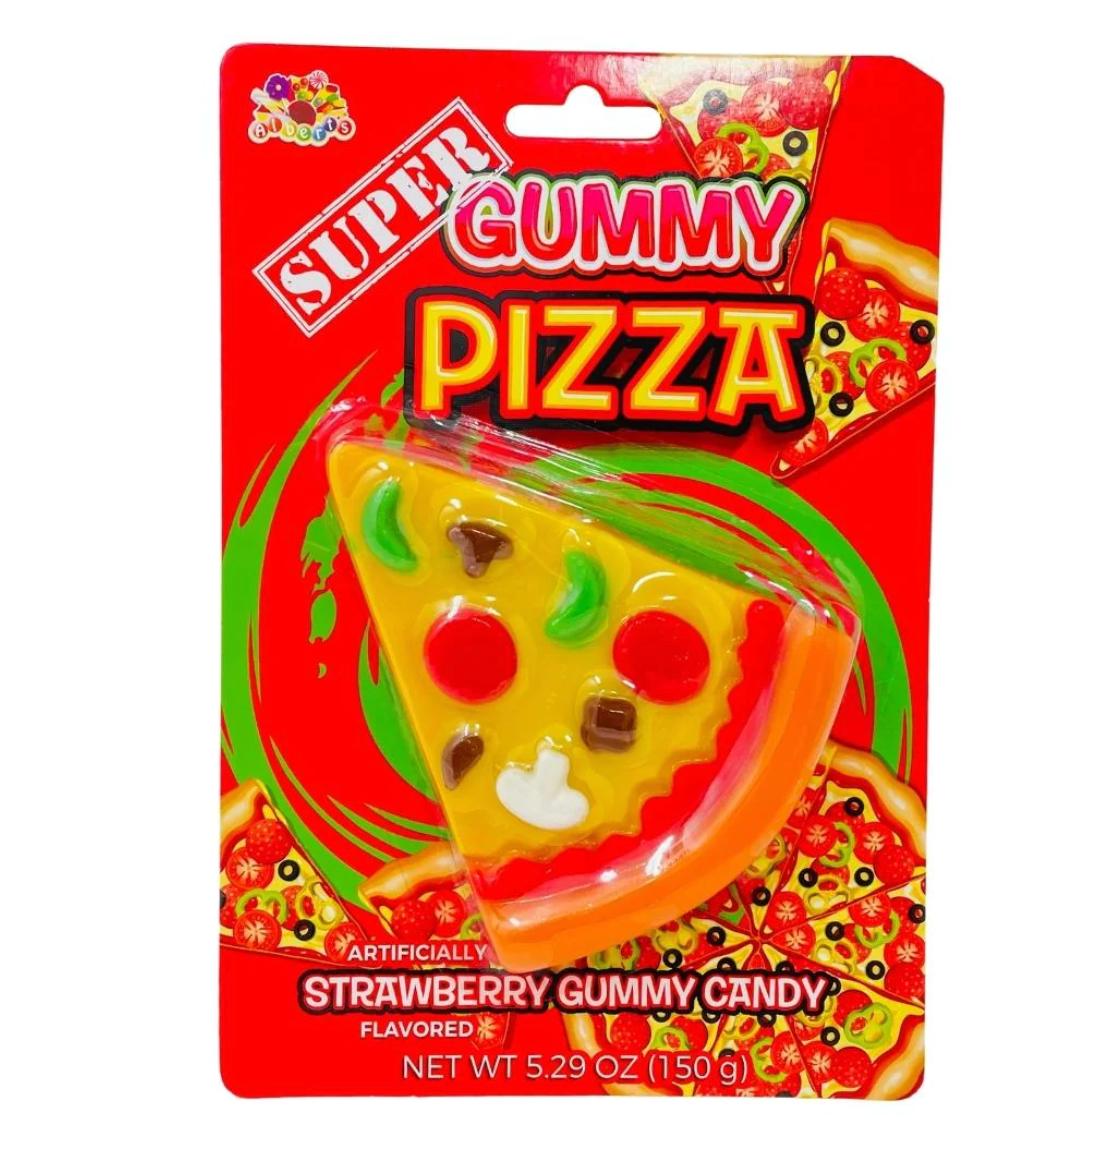 SUPER GUMMY - PIZZA